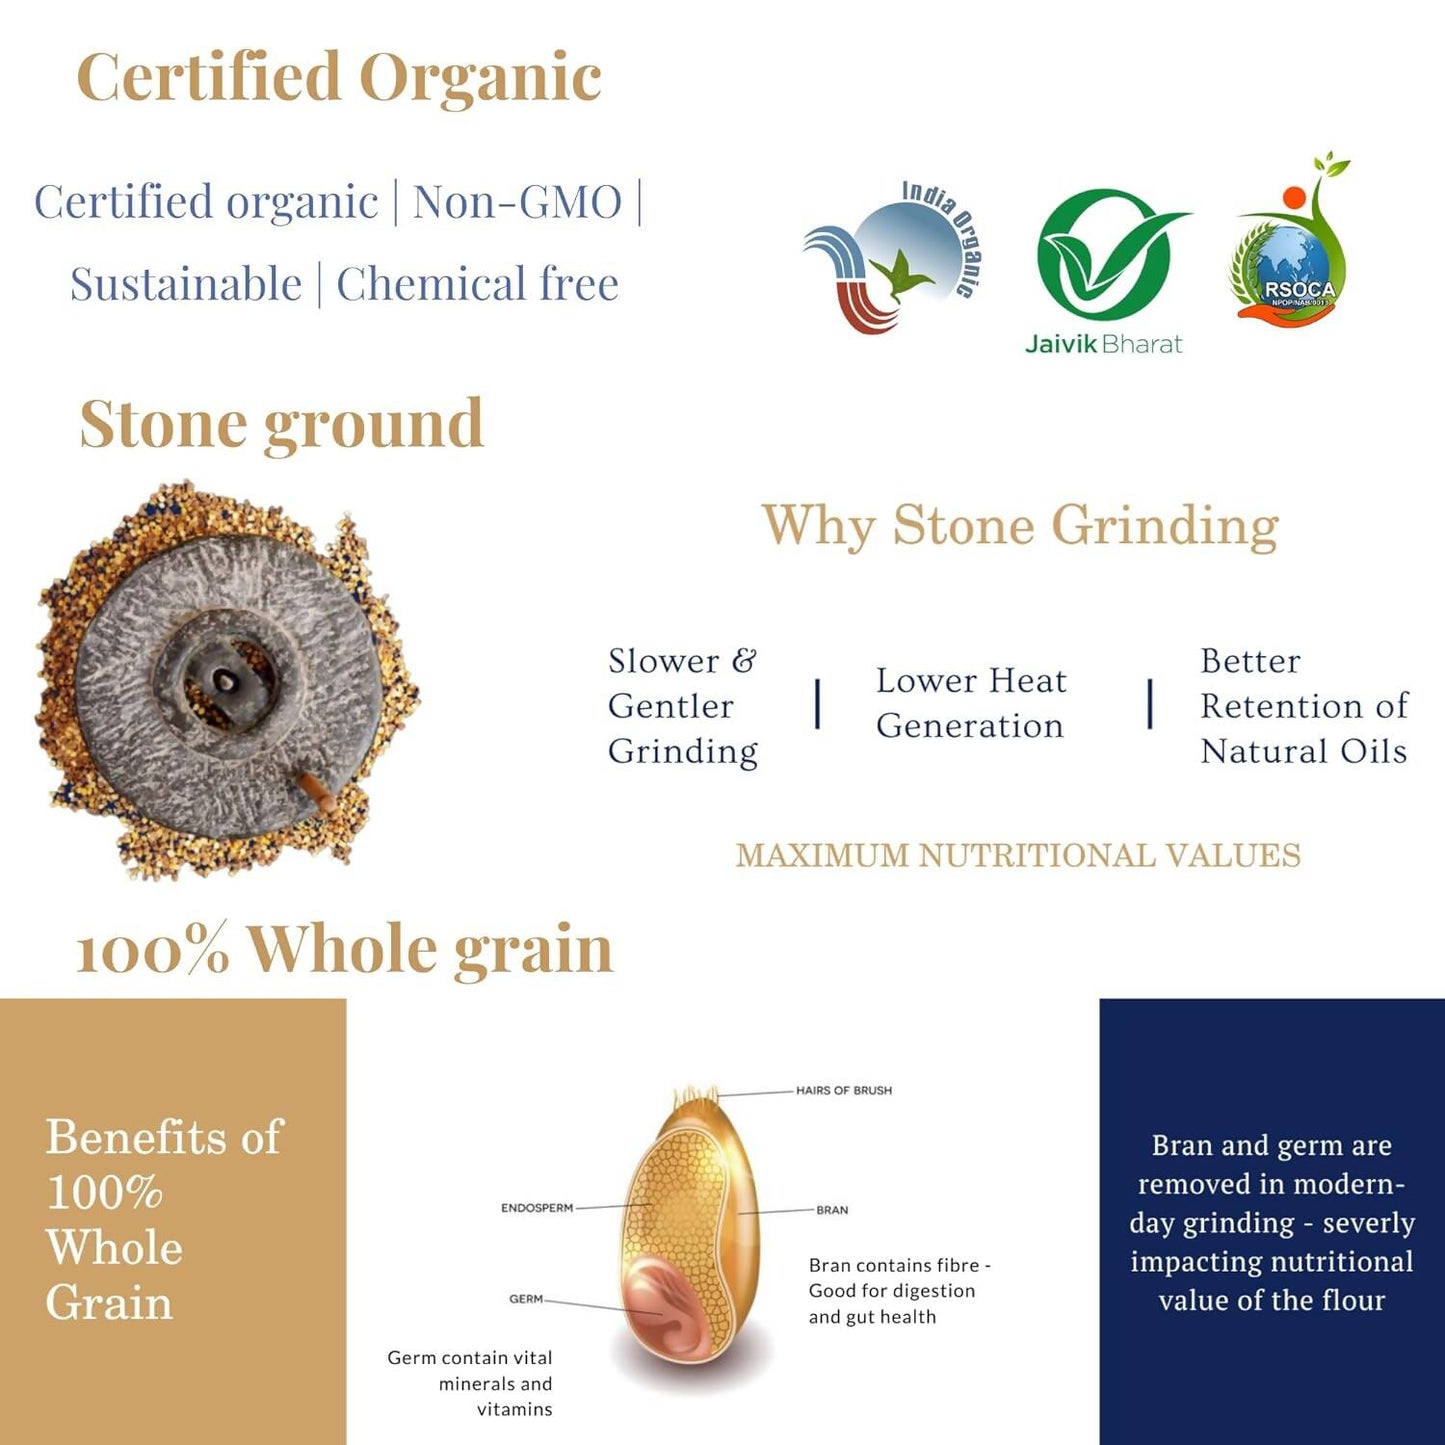 Earthen Story Certified Organic Pearl Barley Flour